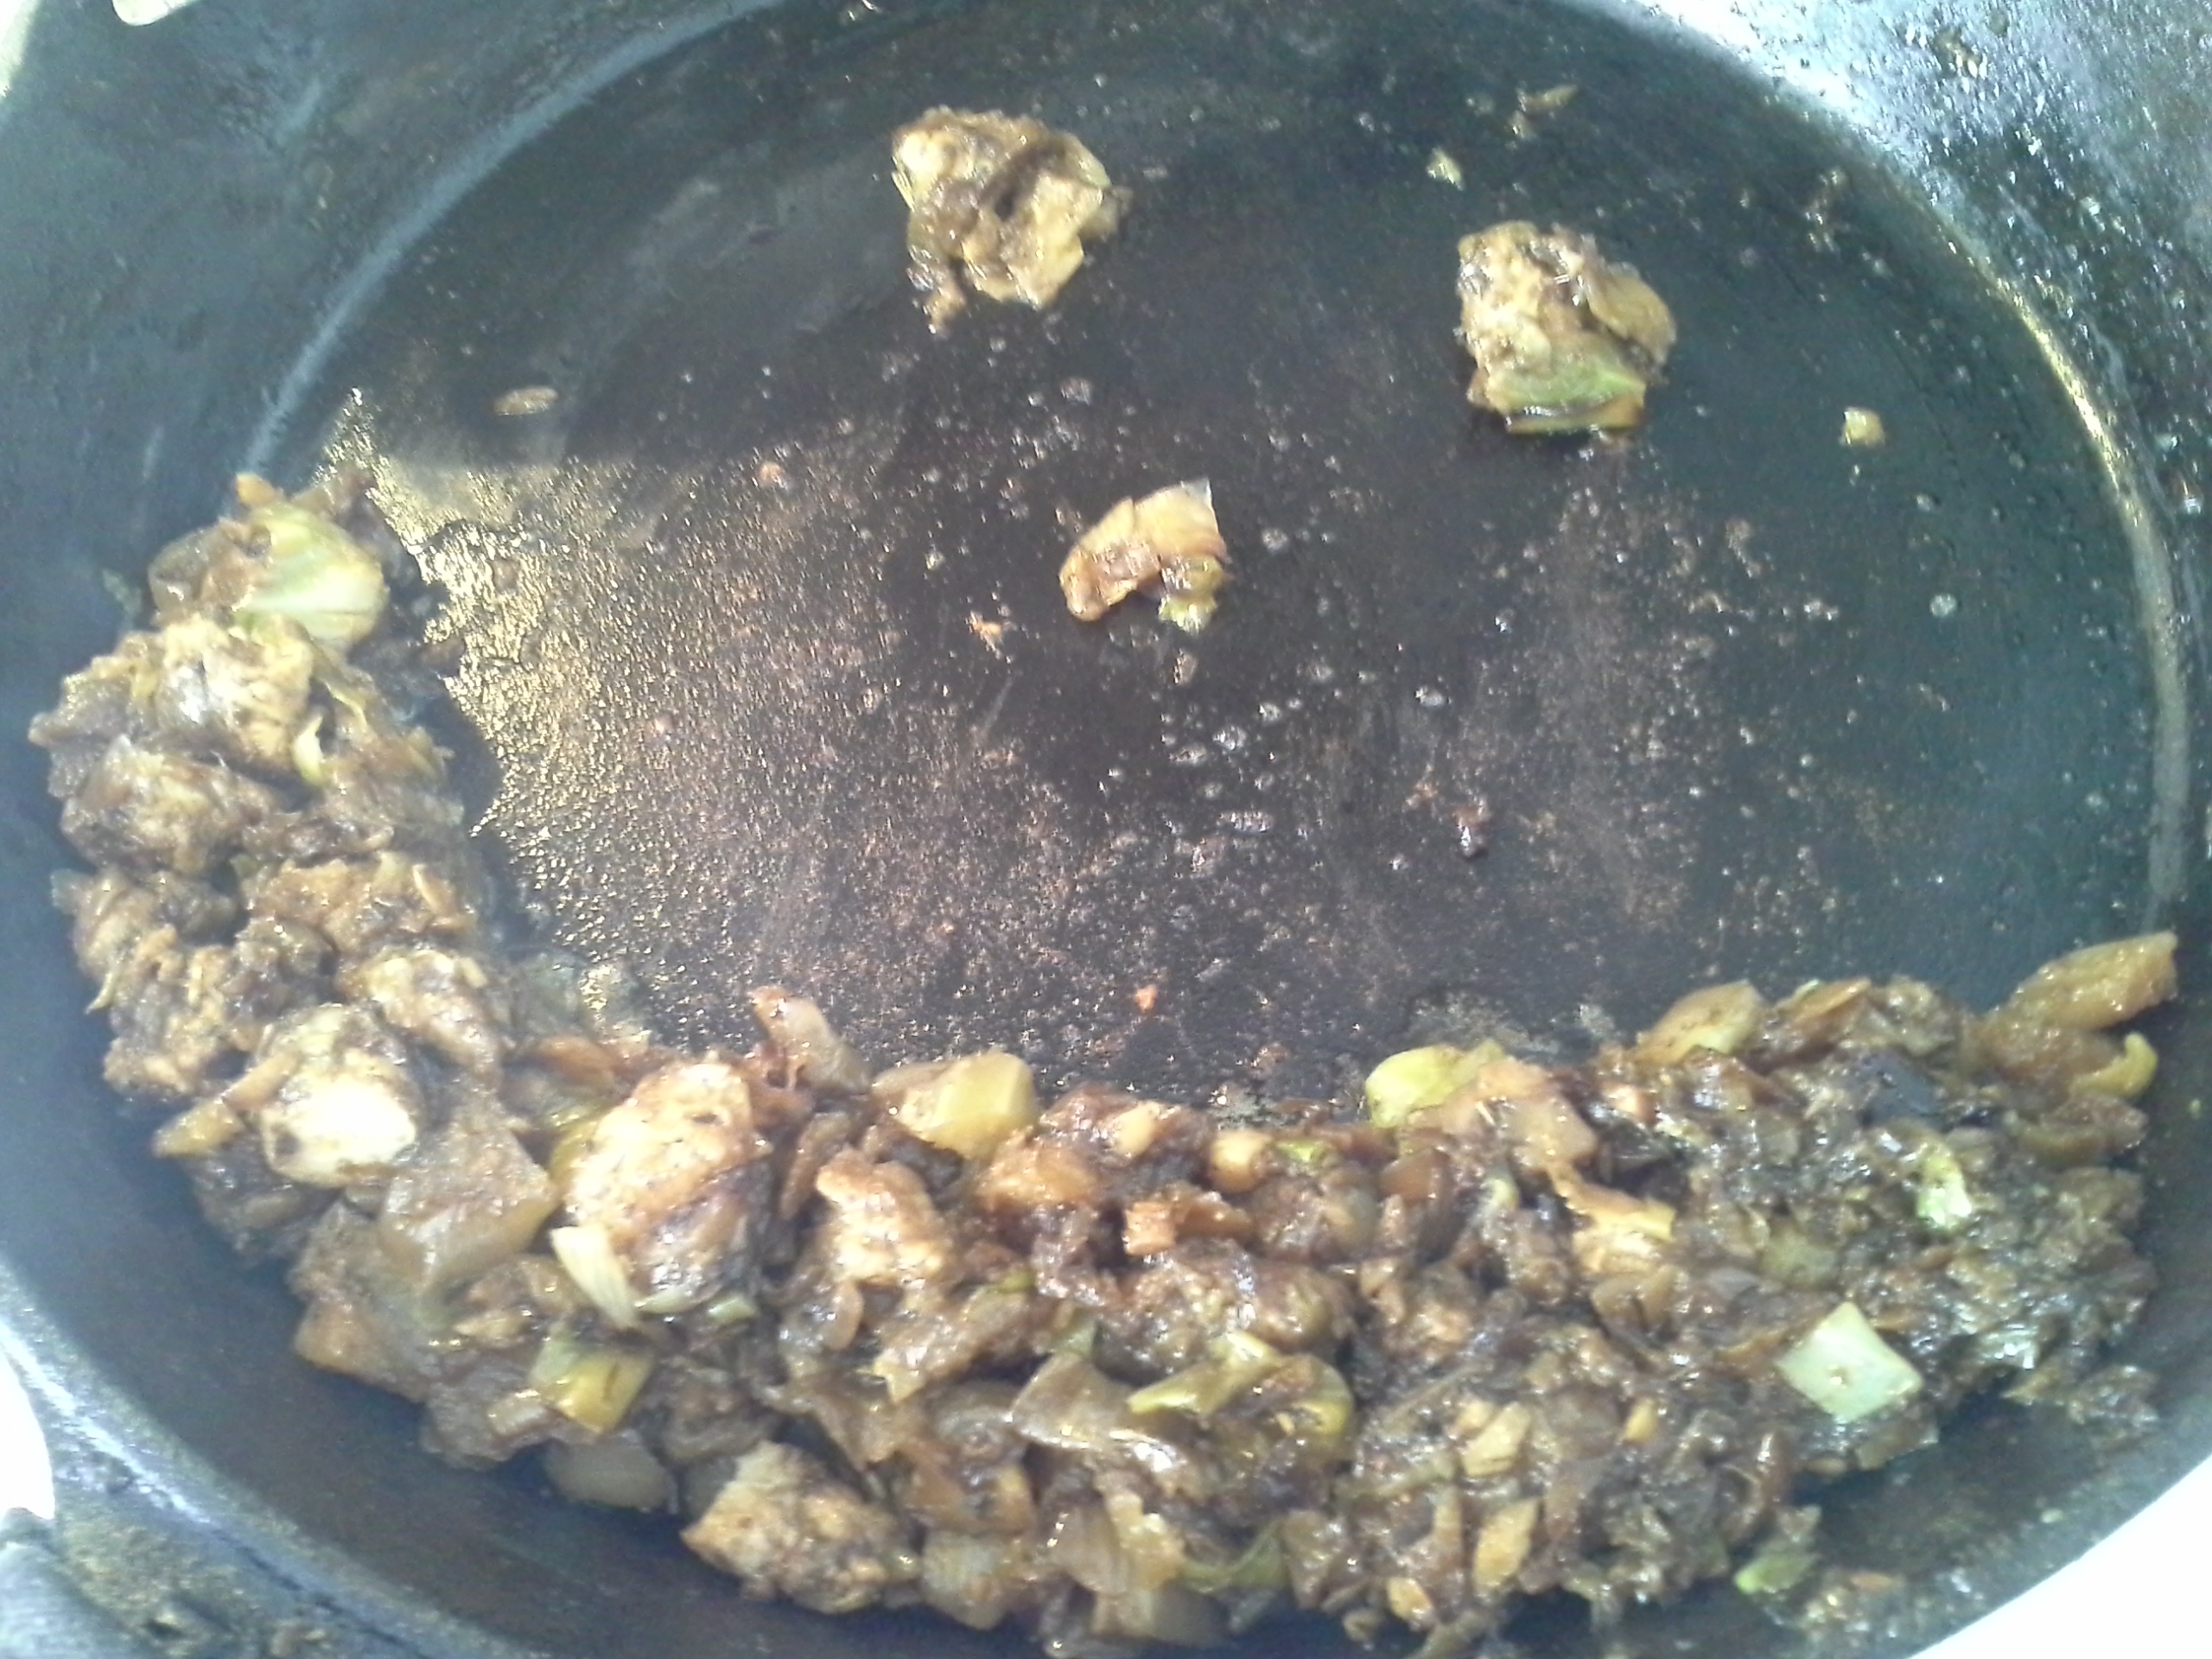 Breakfast: 11:05 a.m. | 1 pork chop, 1/4 head cabbage, 1/2 sweet onion, 4 cloves garlic, 2 Tbsp. coconut oil, herbs & spices